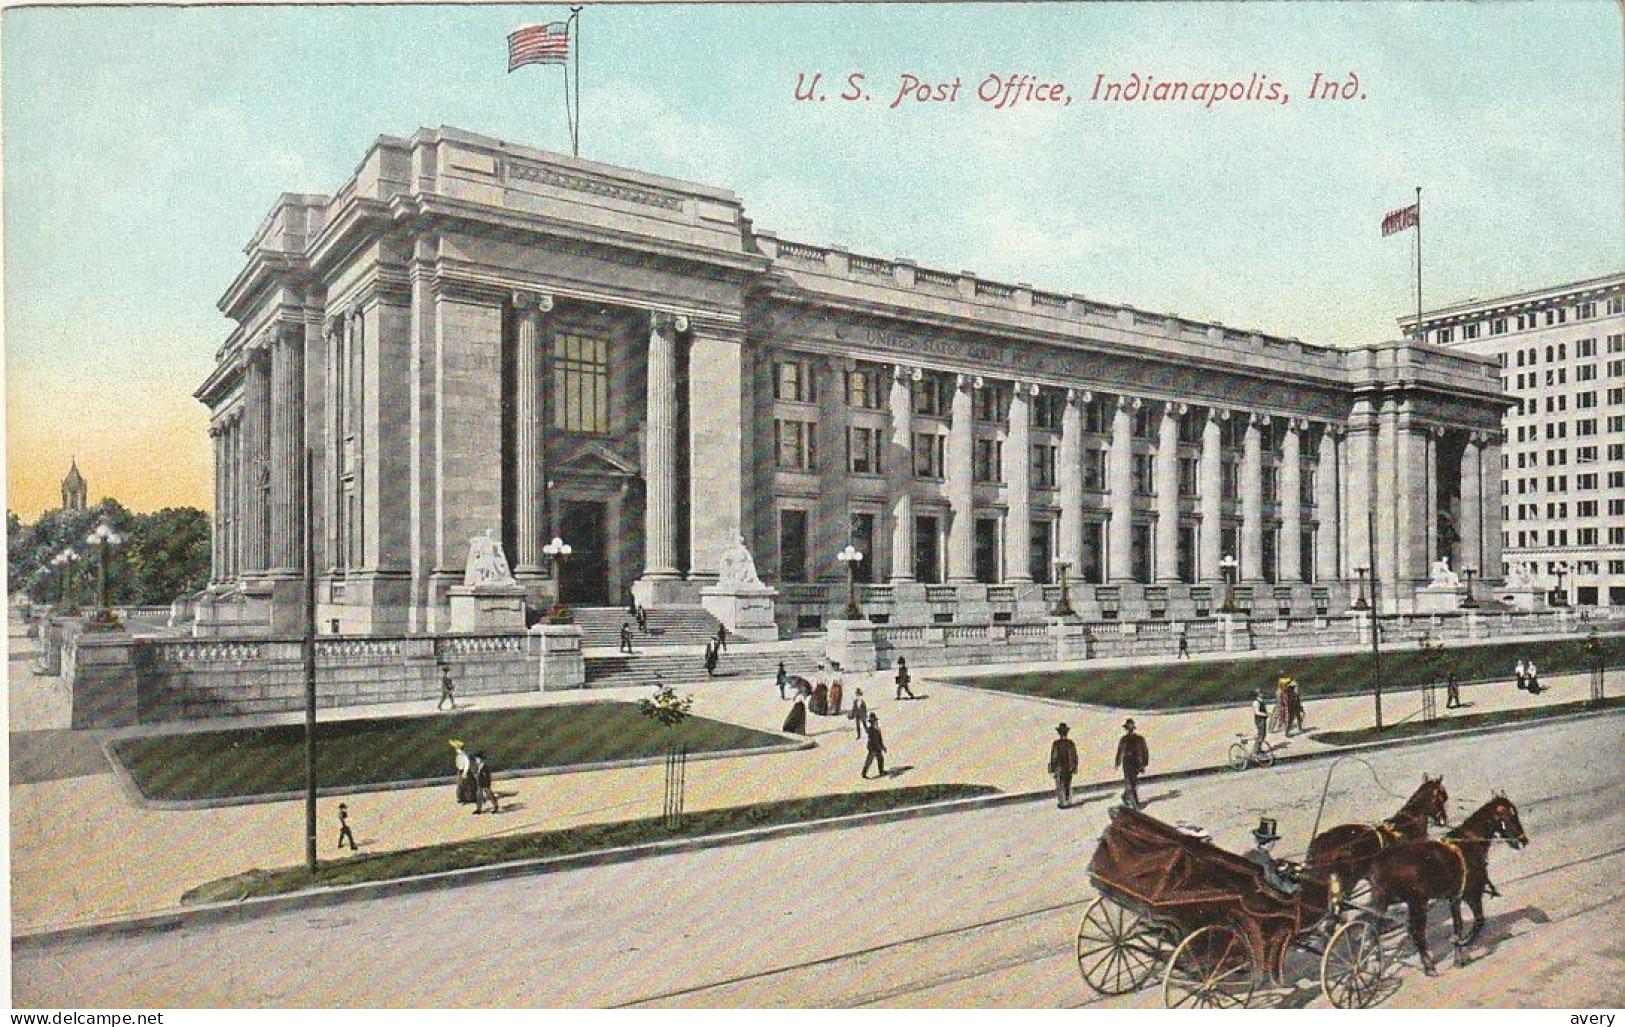 U. S. Post Office, Indianapolis, Indiana - Indianapolis